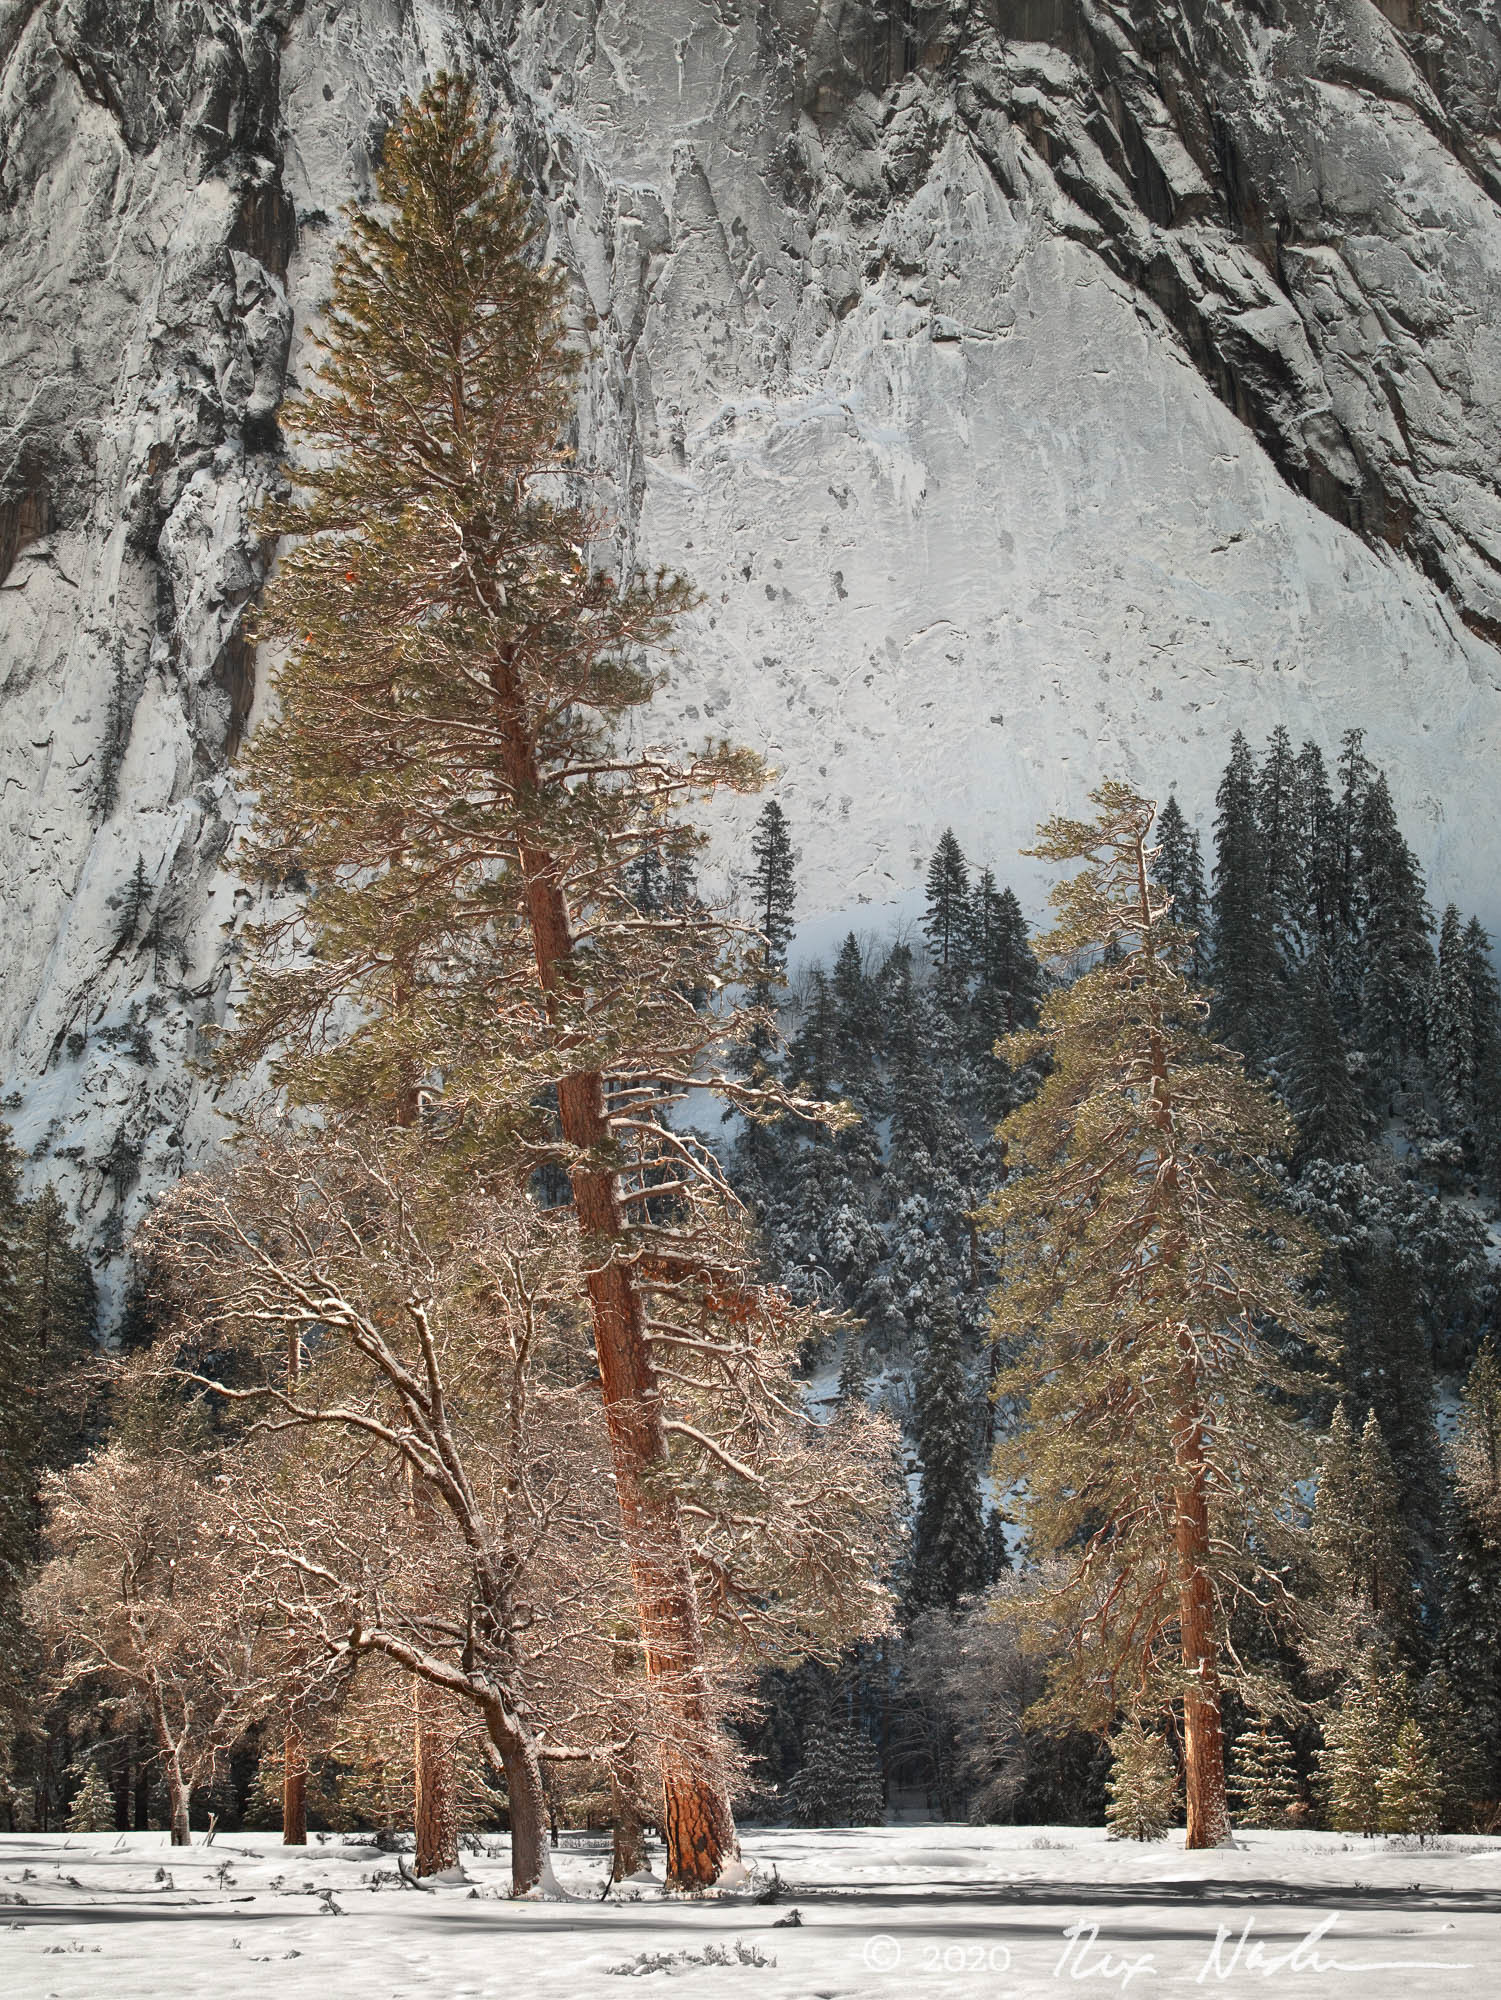 Angle of Repose - Yosemite Valley